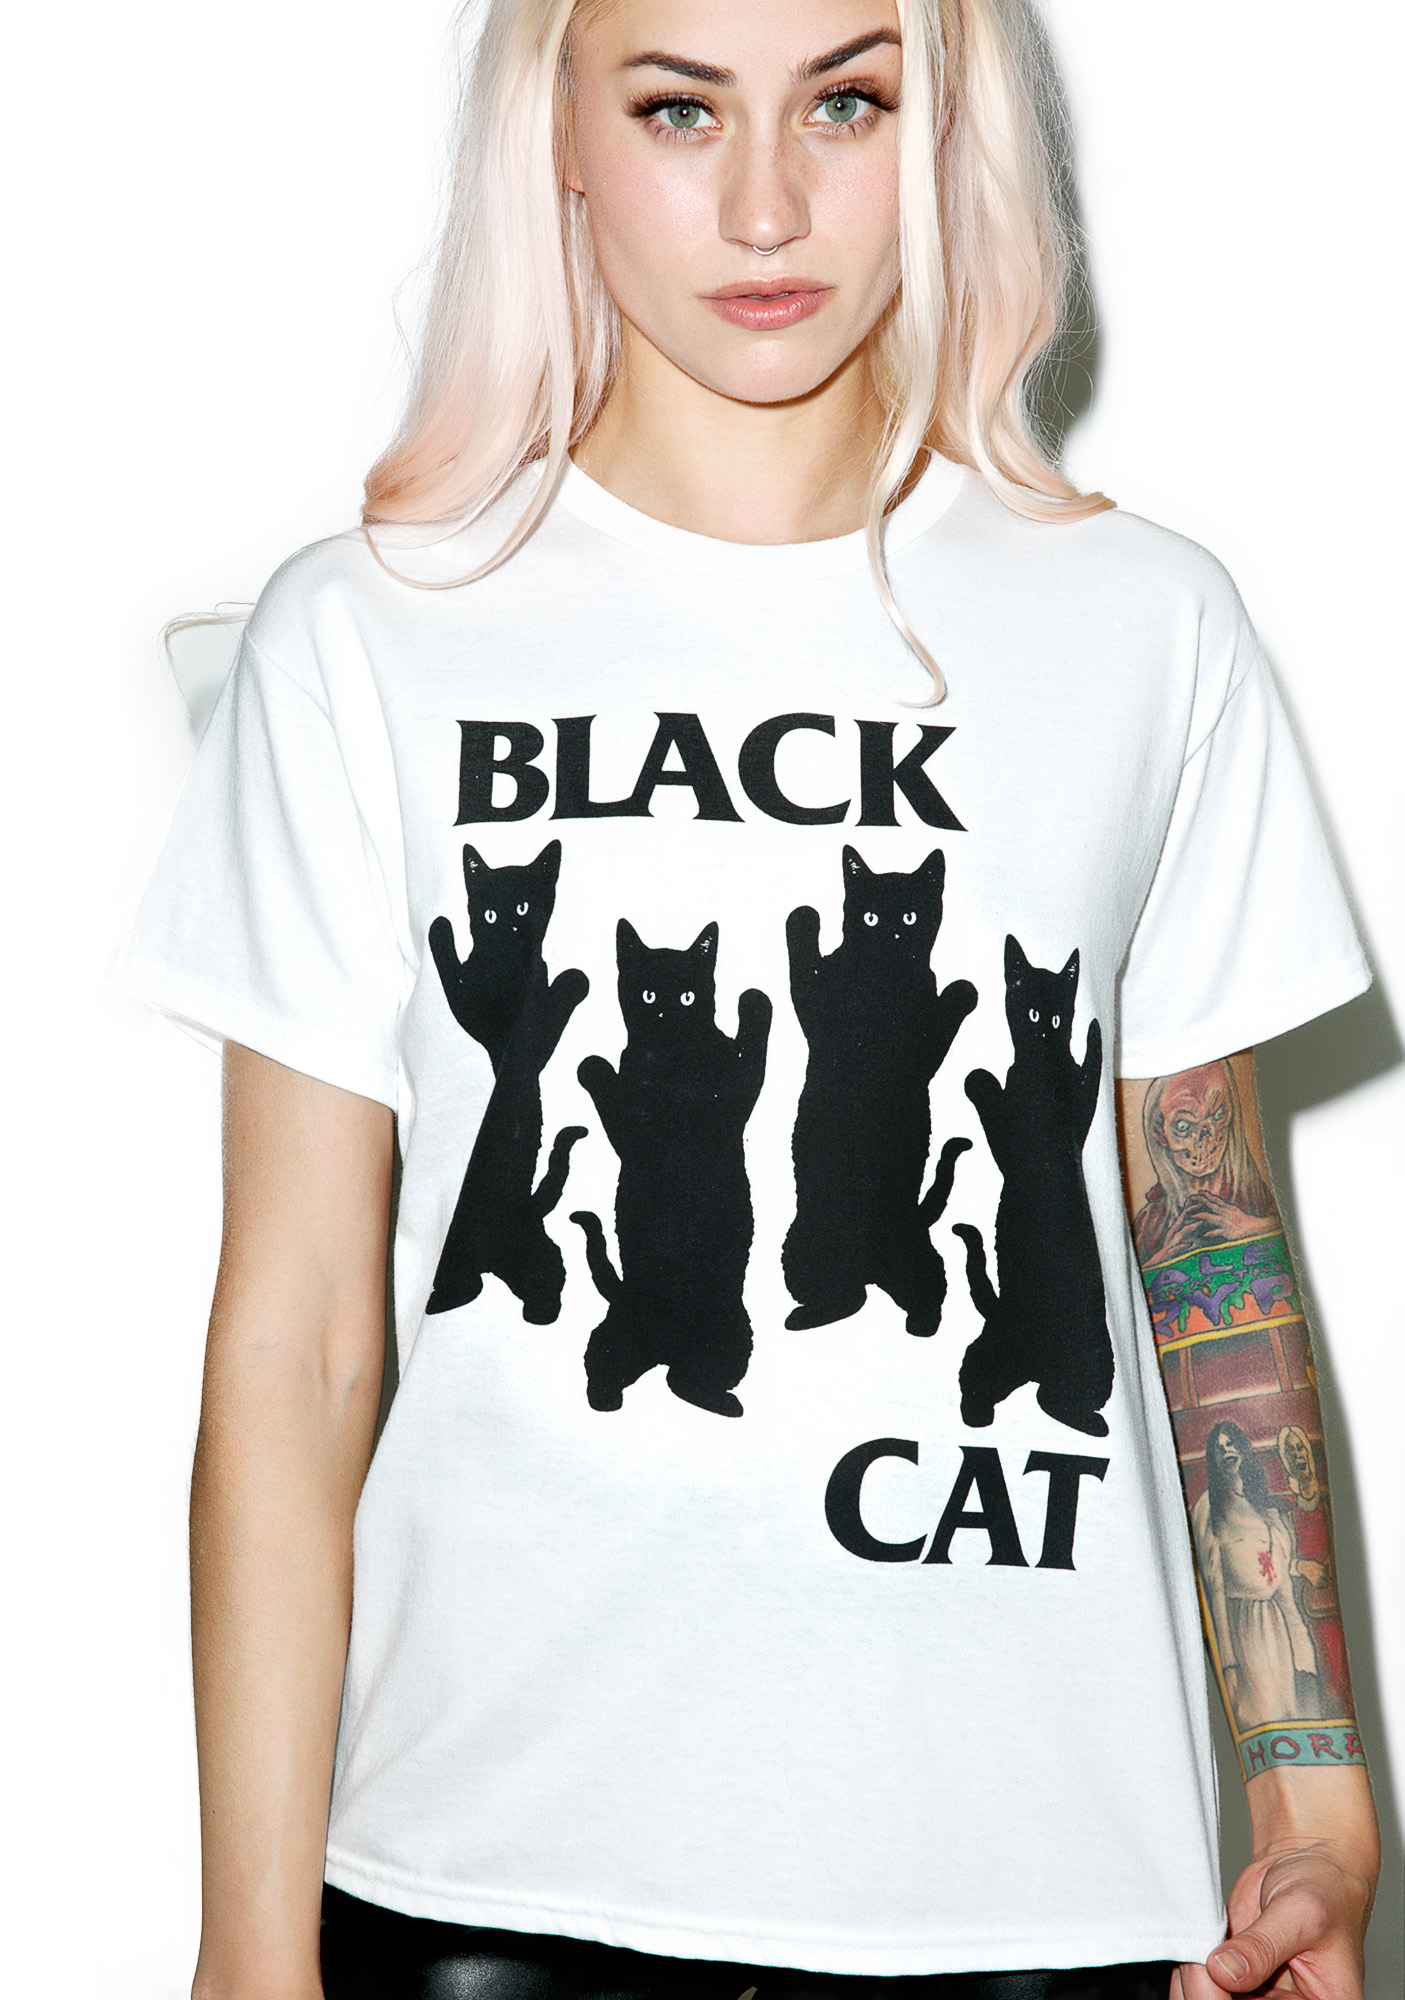 Black Cats - I Want It Black